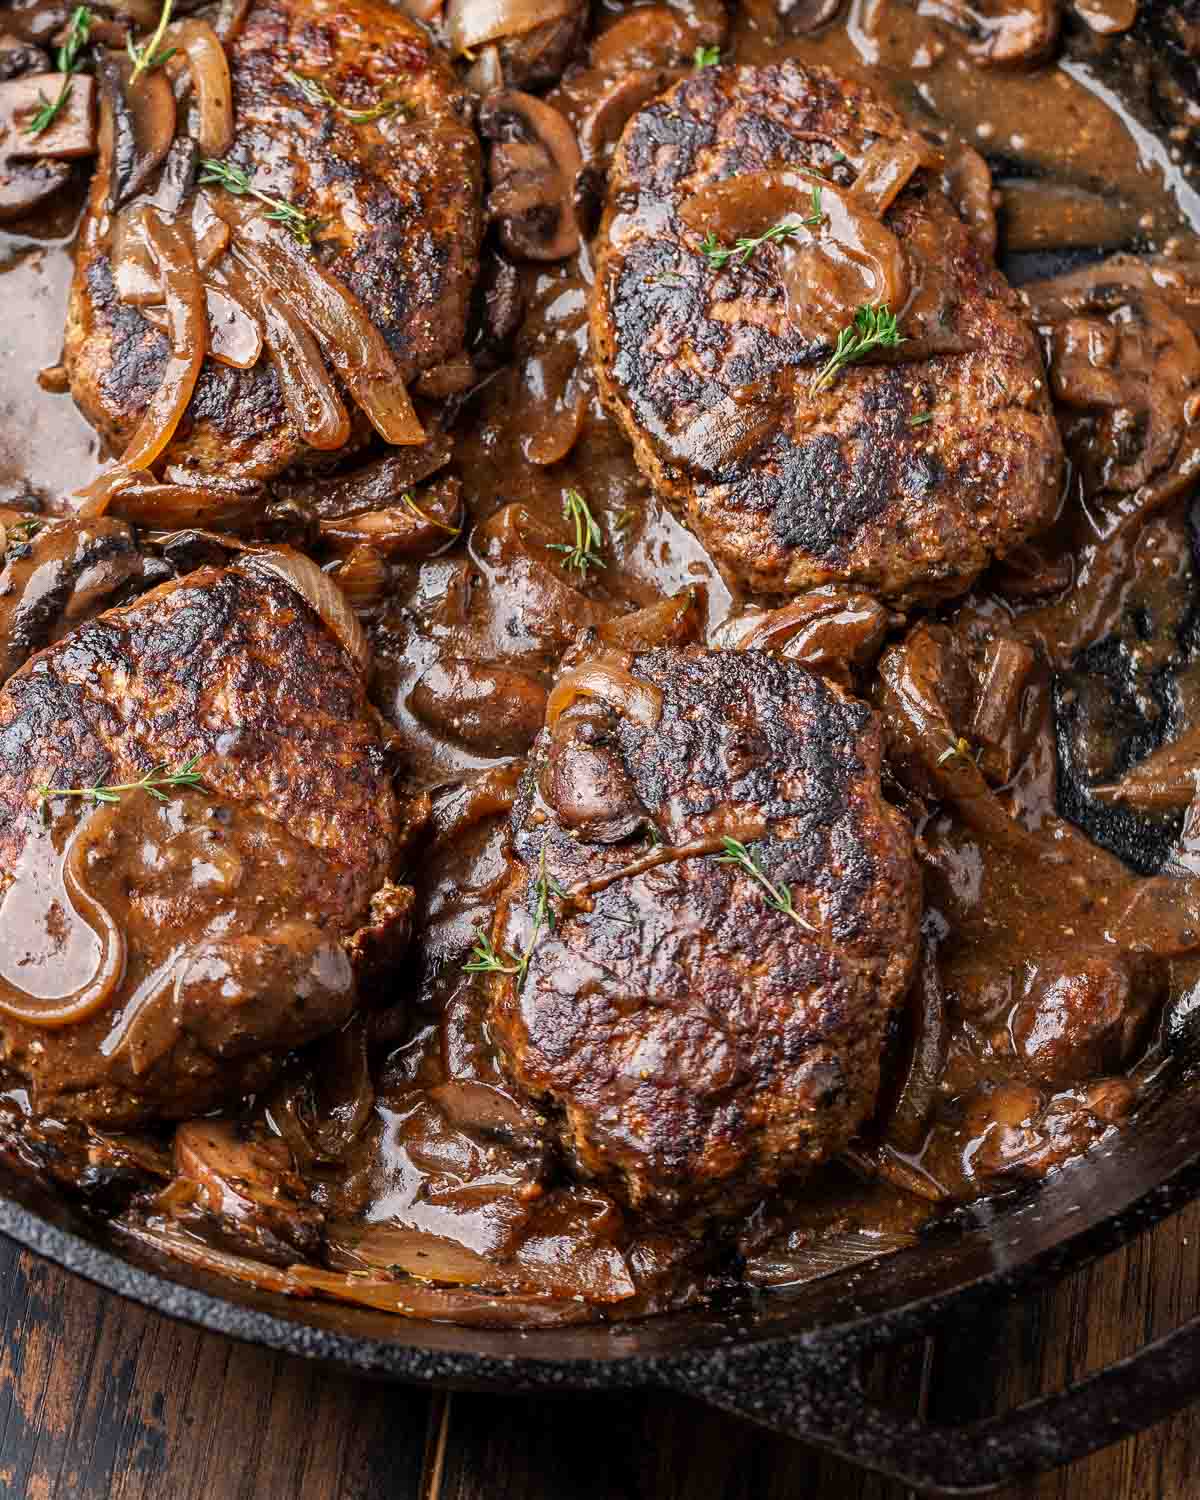 Cast iron pan with 4 salisbury steaks topped with mushroom gravy.